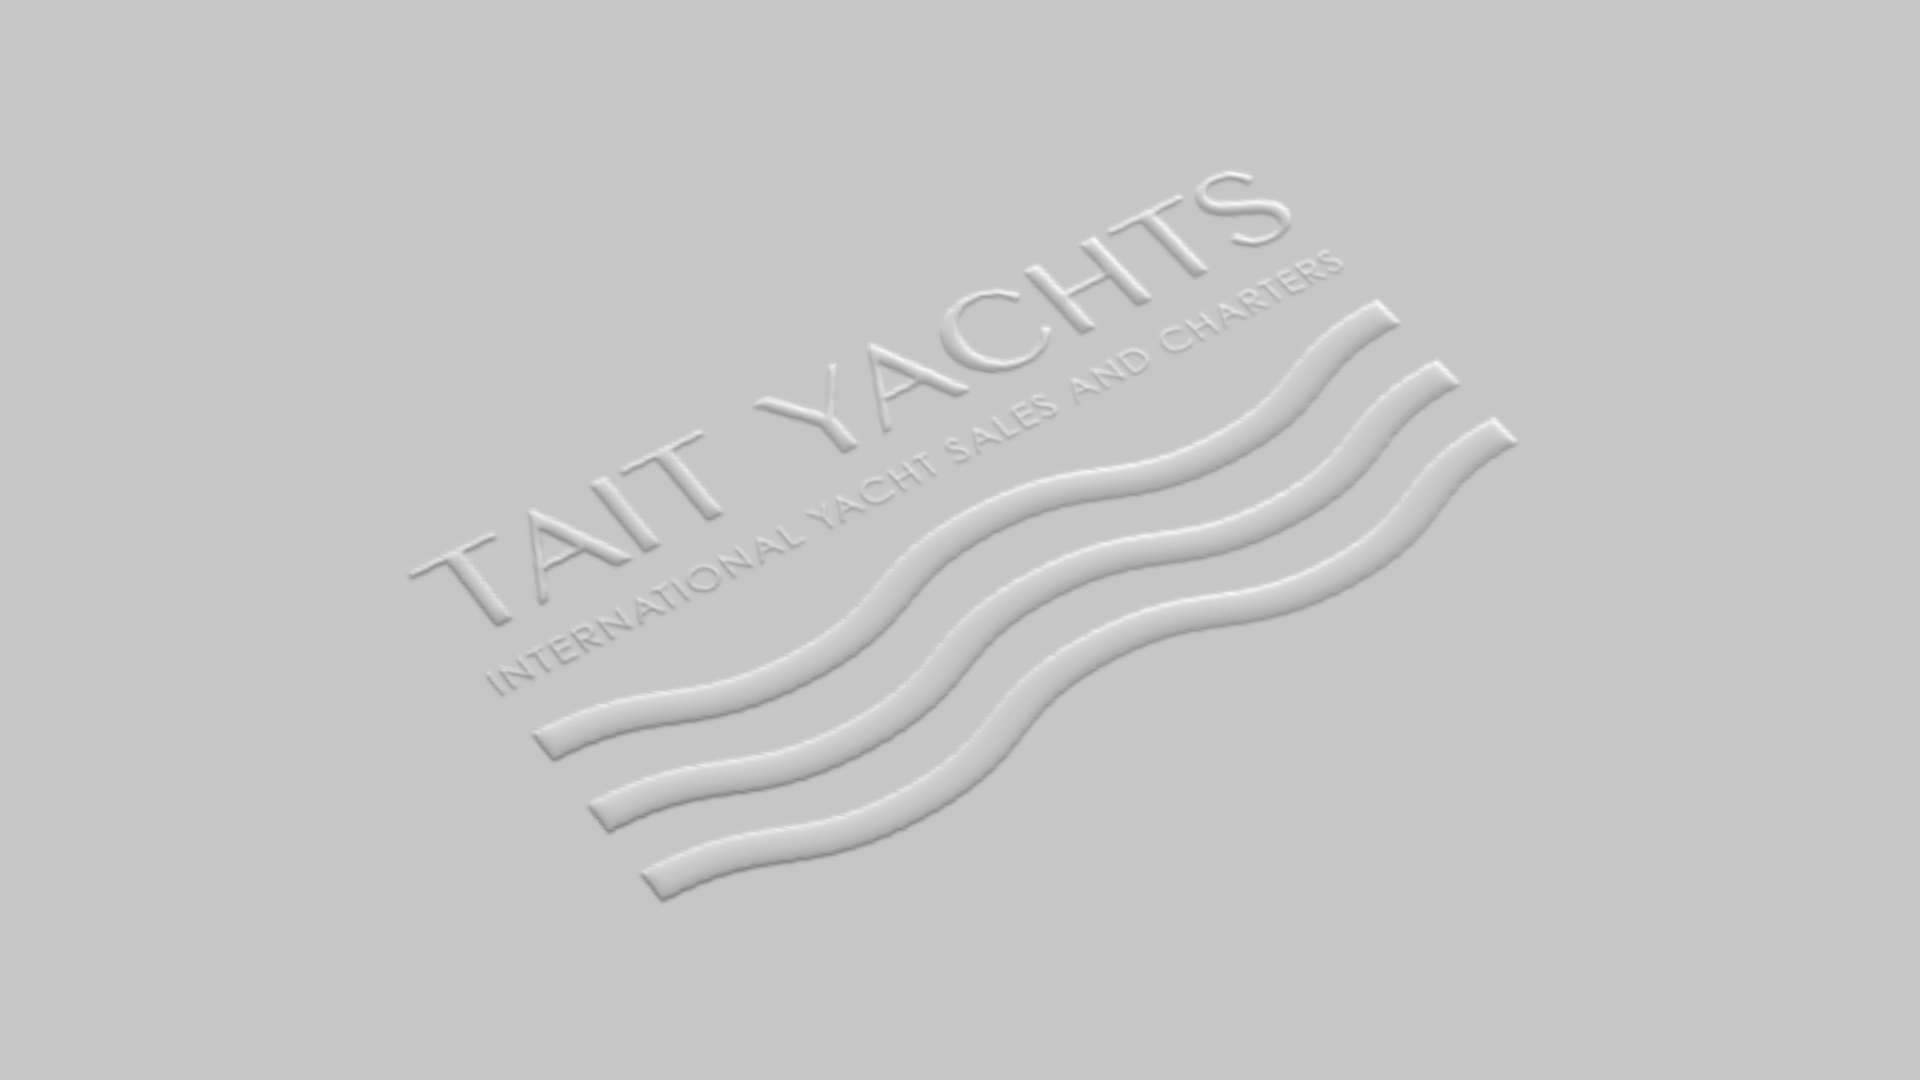 Custom Branding & Logo Design - Tait Yachts International Yacht Sales and Charters